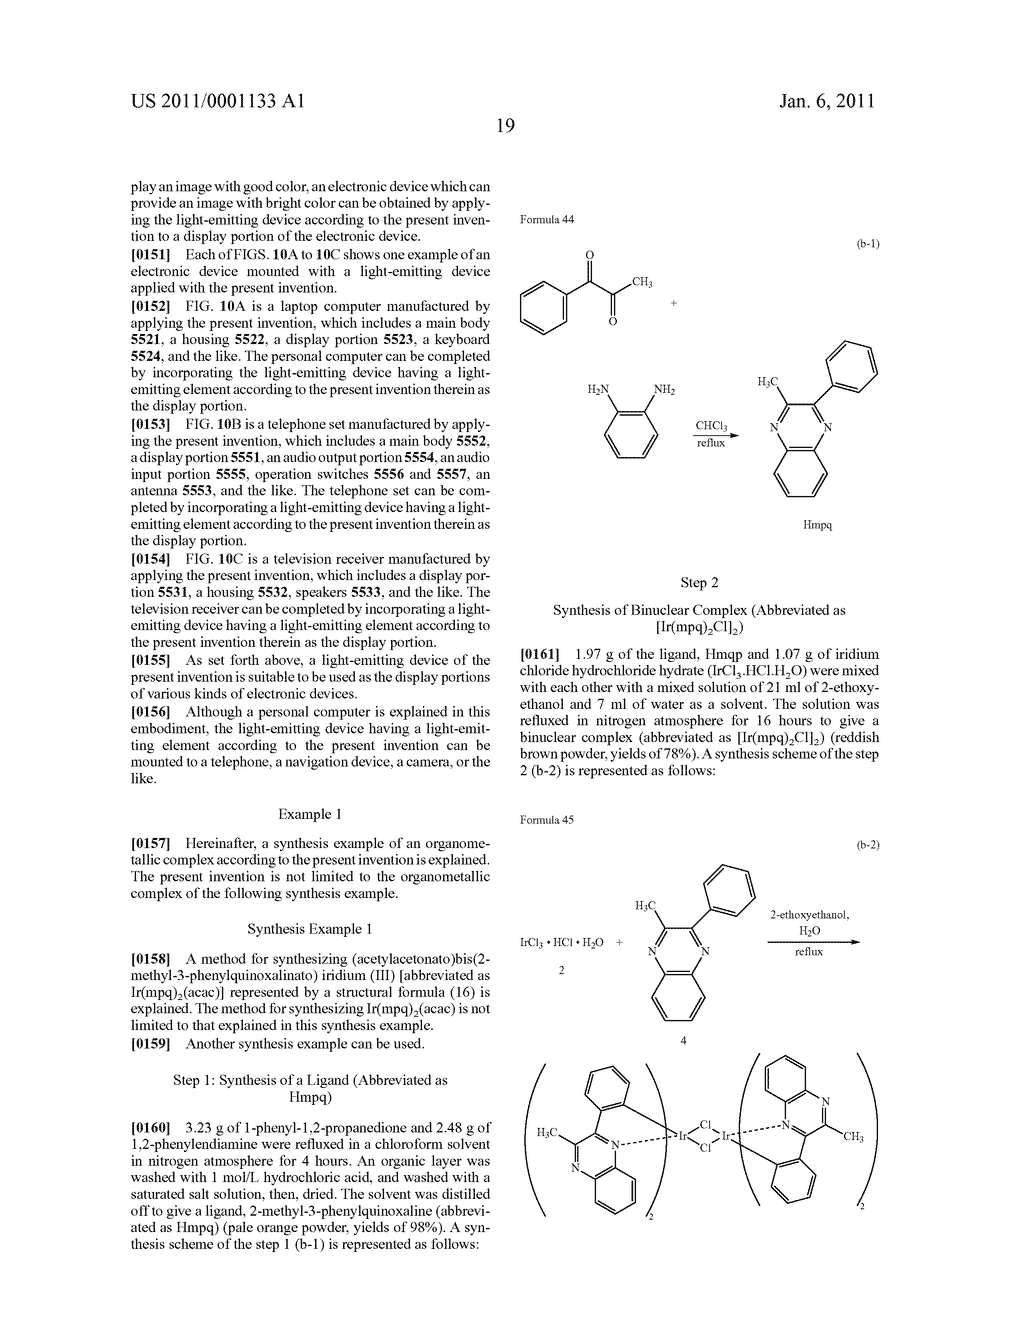 ORGANOMETALLIC COMPLEX, AND LIGHT-EMITTING ELEMENT AND LIGHT-EMITTING DEVICE USING THE ORGANOMETALLIC COMPLEX - diagram, schematic, and image 64